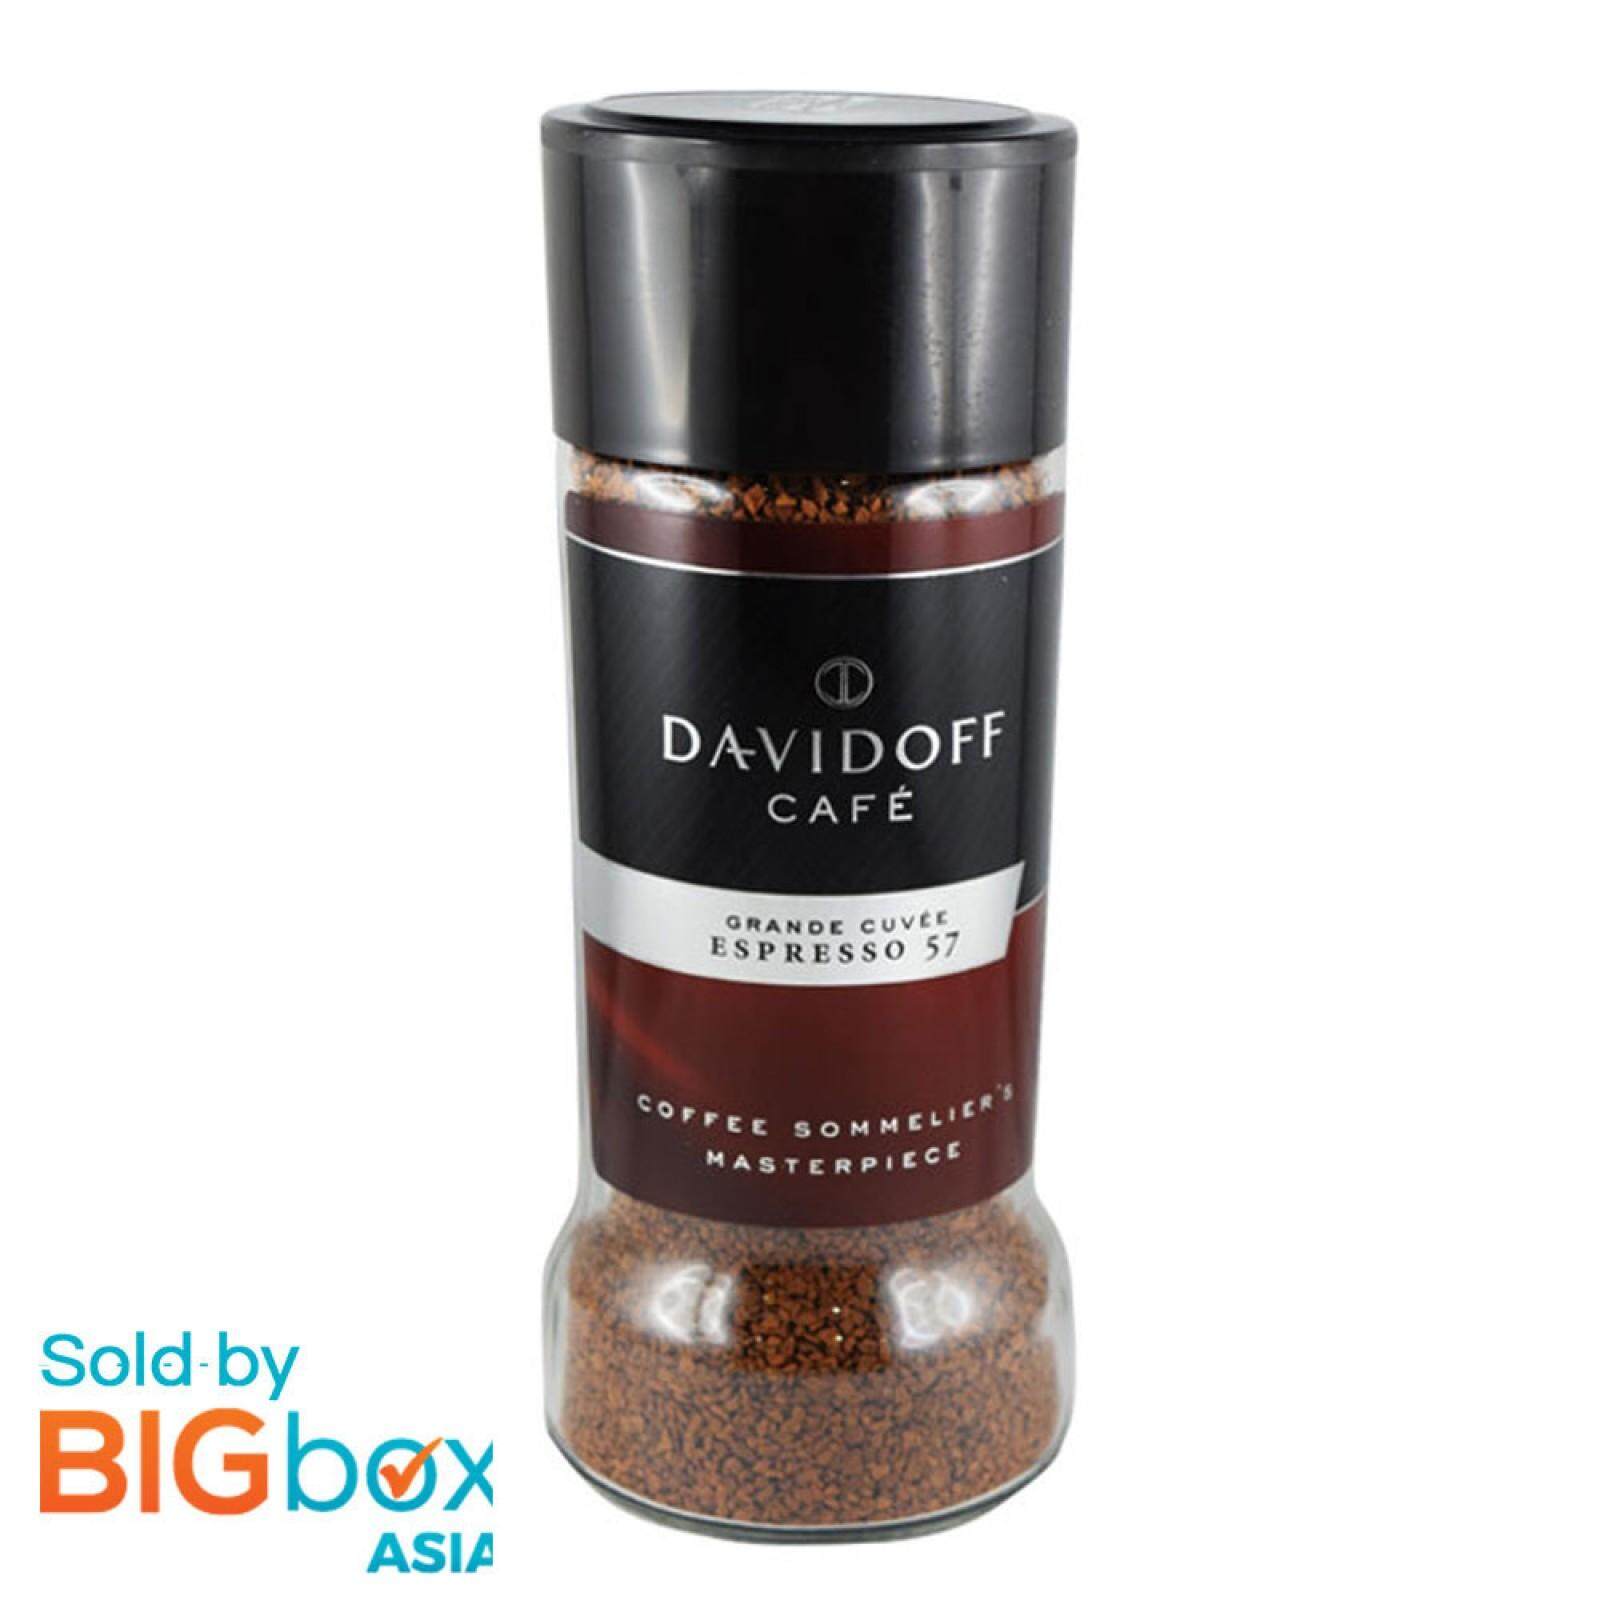 Davidoff Cafe Espresso 57 100g - Switzerland